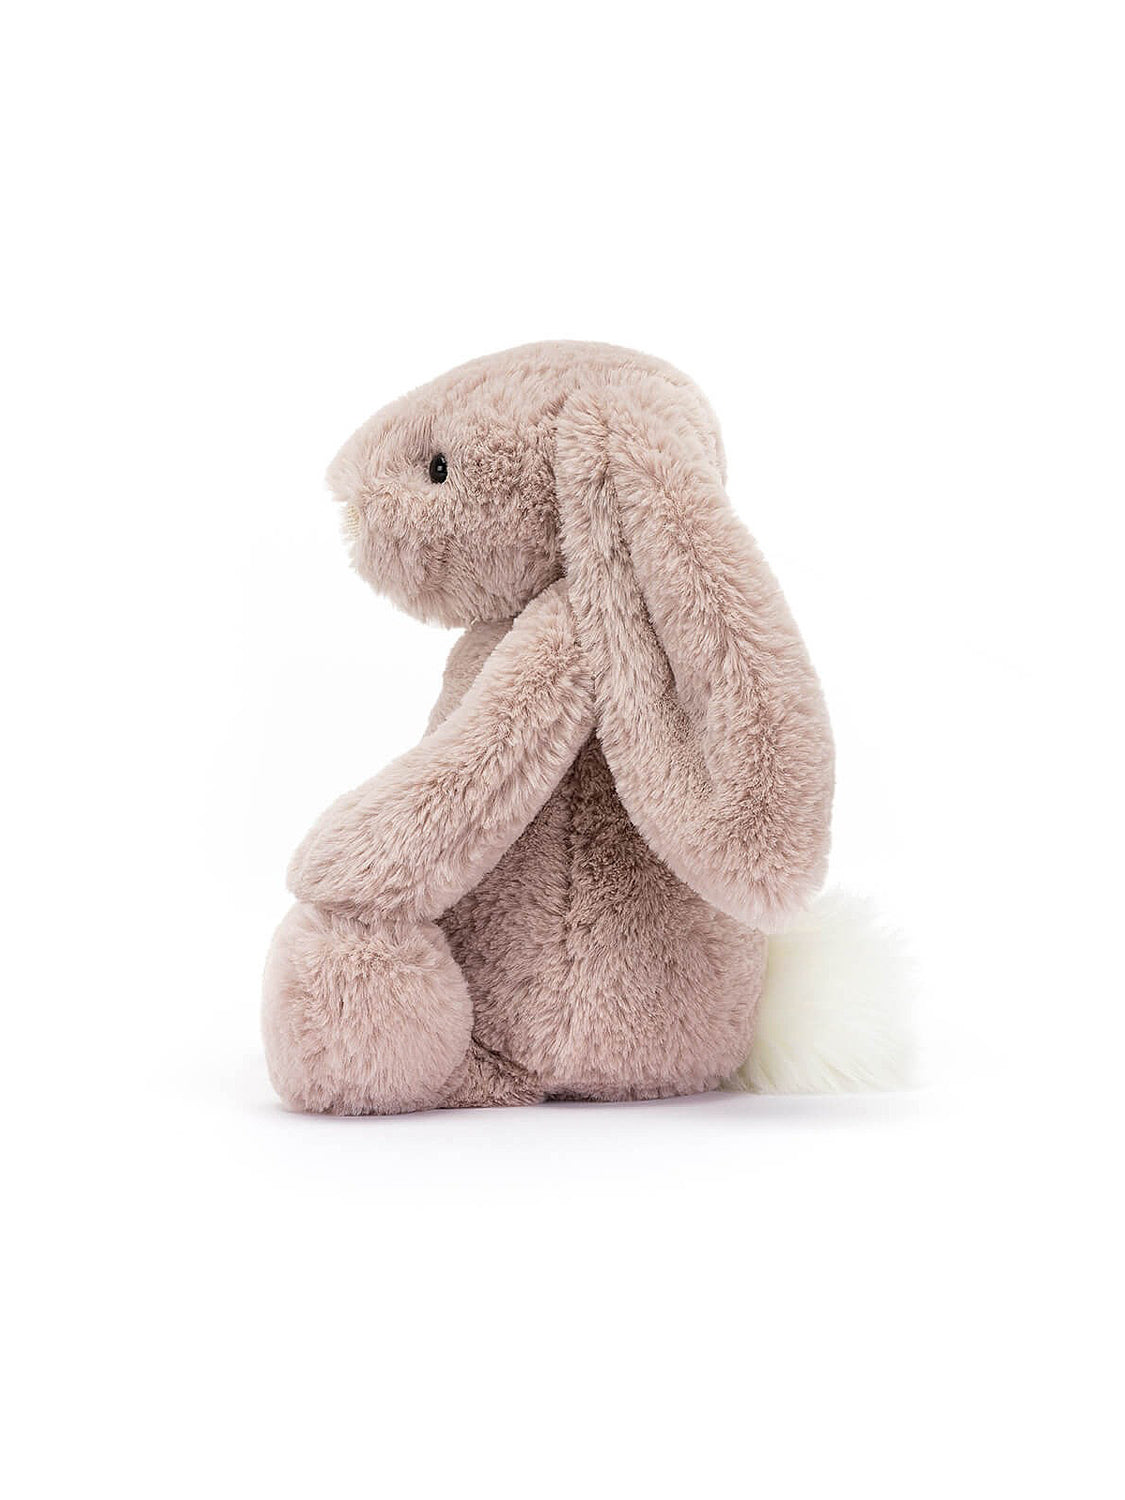 Bashful Luxe Bunny Original Rosa Kuscheltier
31 cm